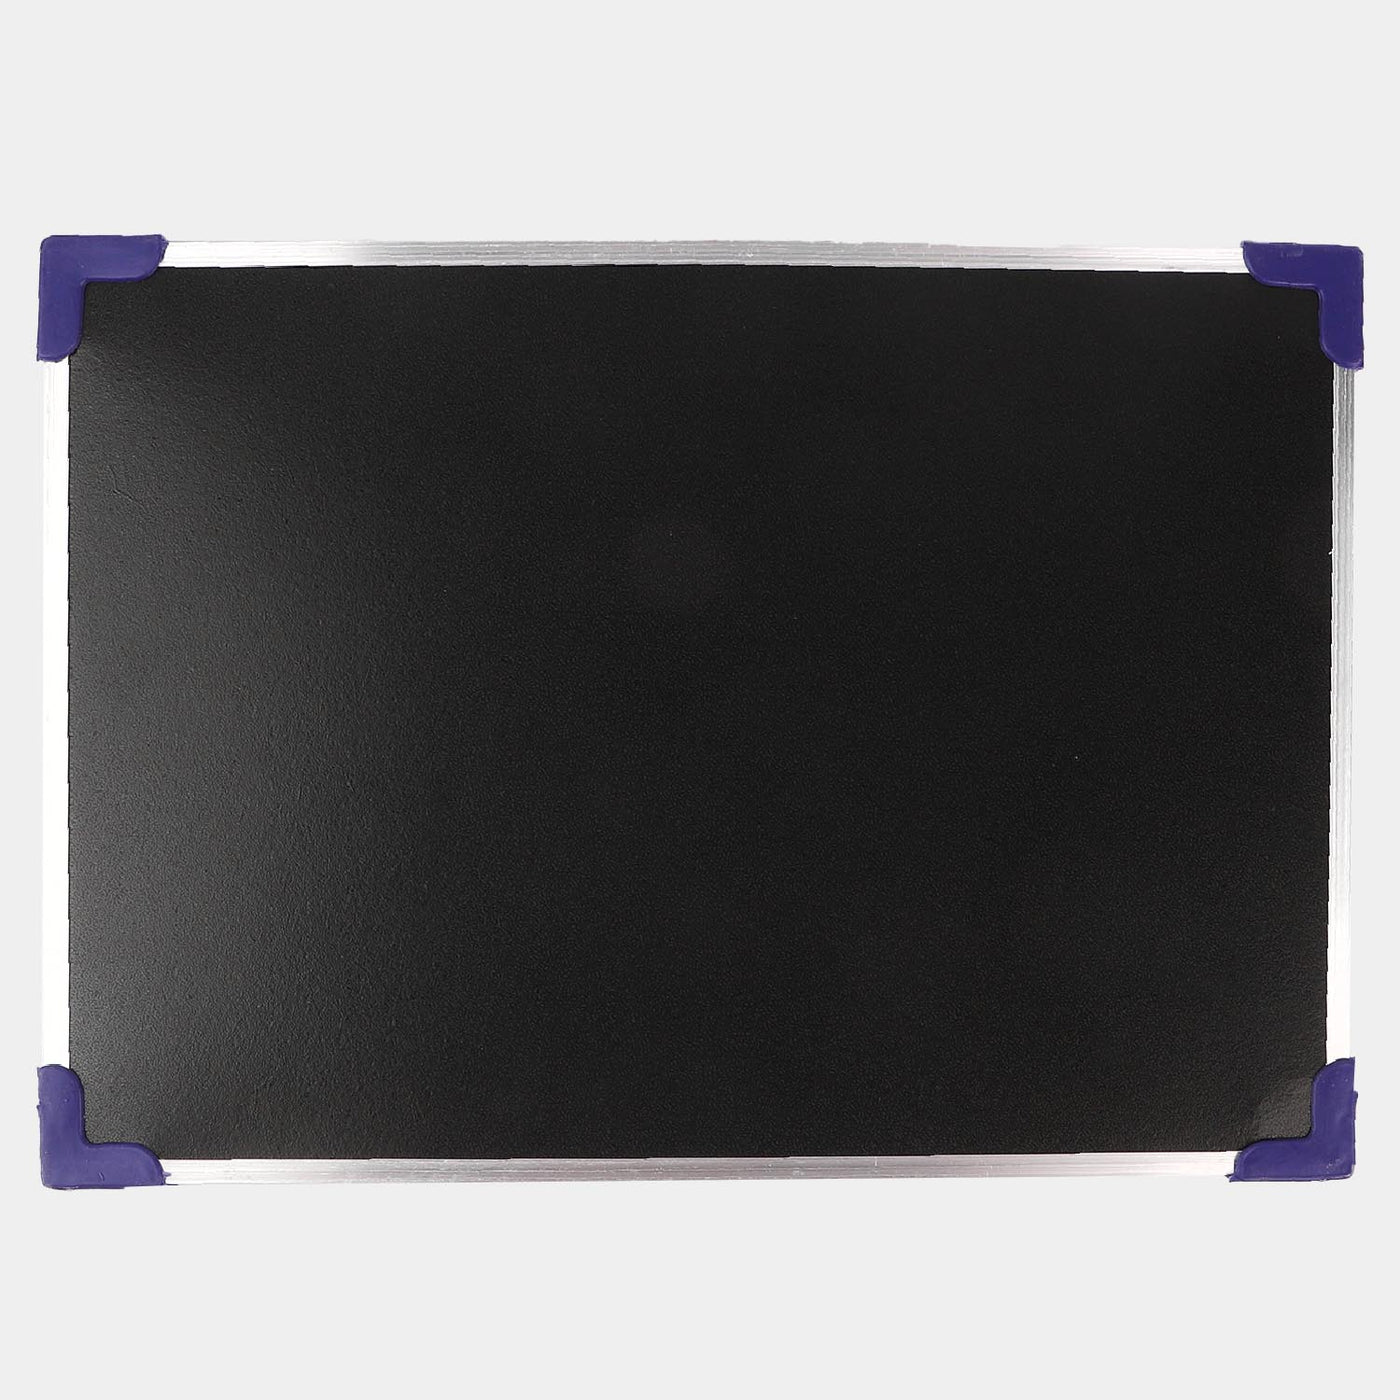 Dry-Erase Black & White Board  For kids